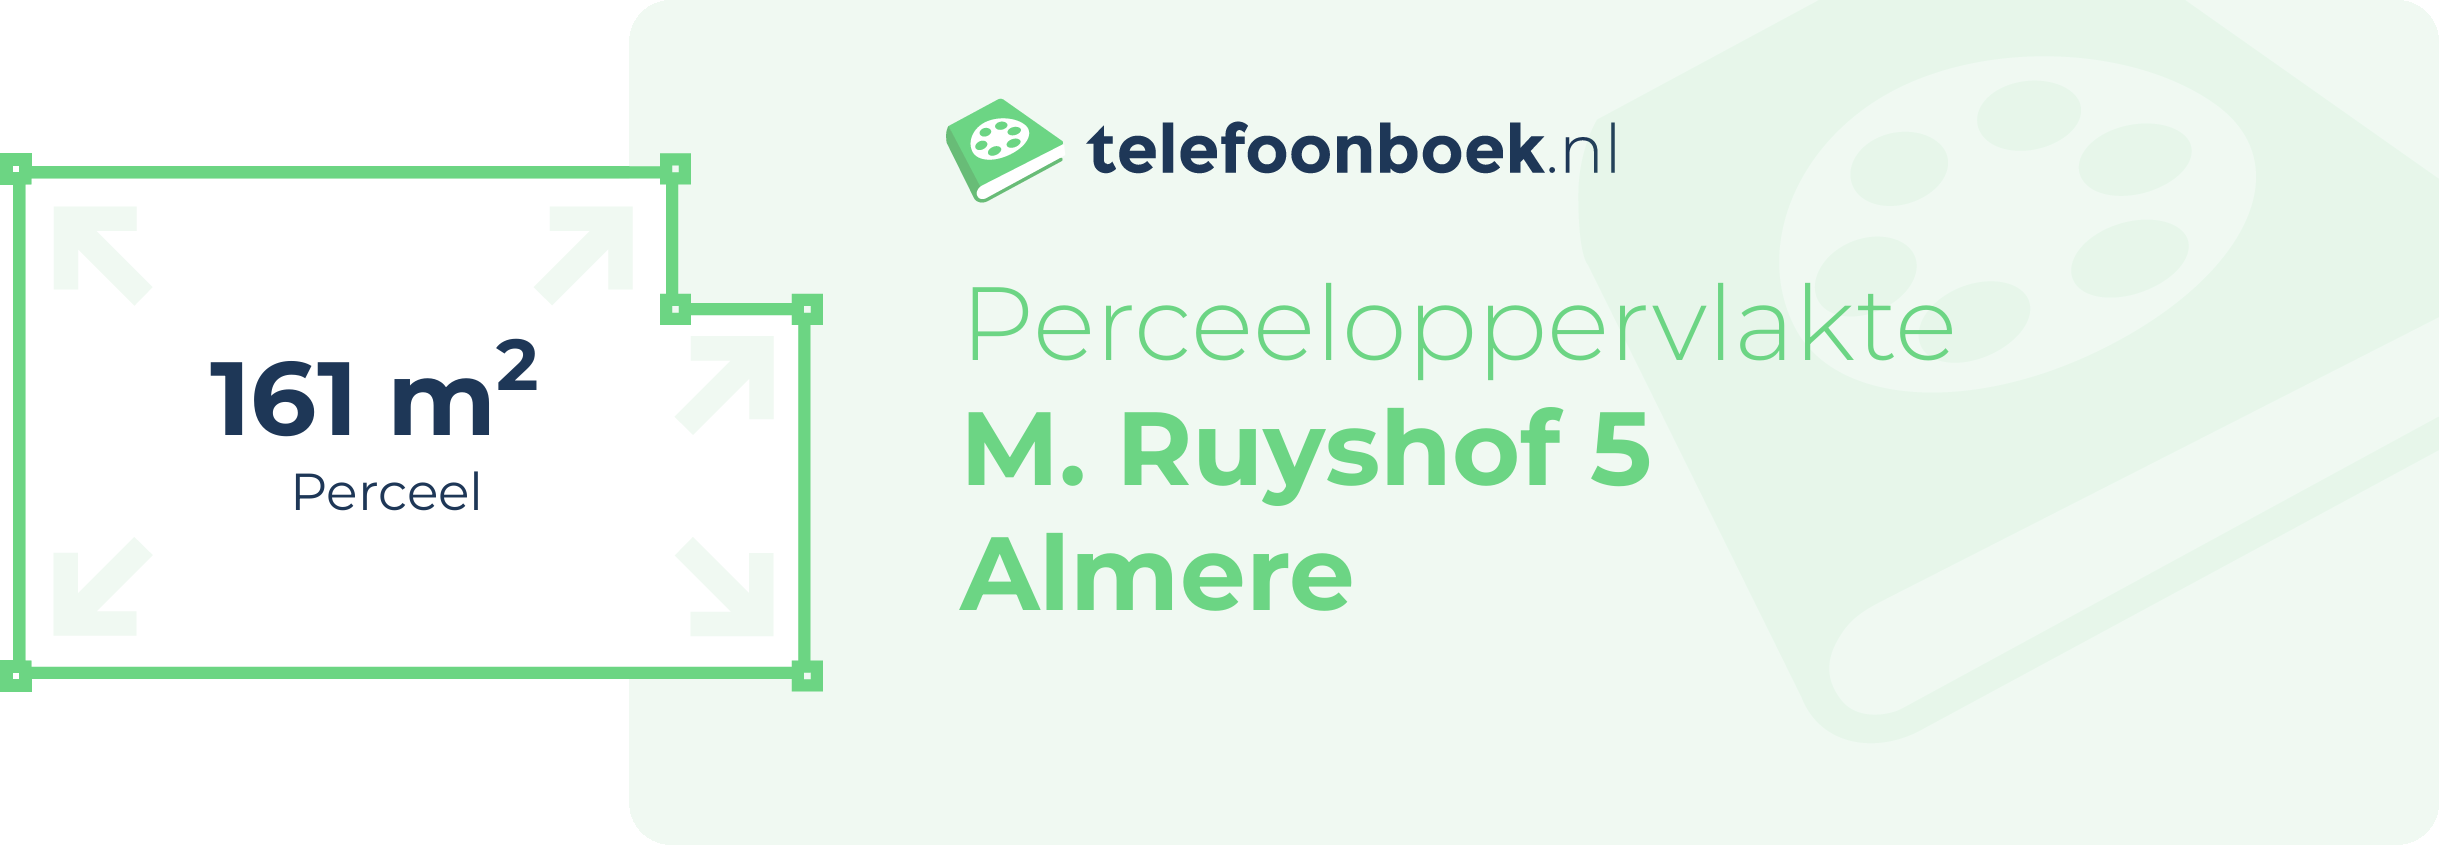 Perceeloppervlakte M. Ruyshof 5 Almere